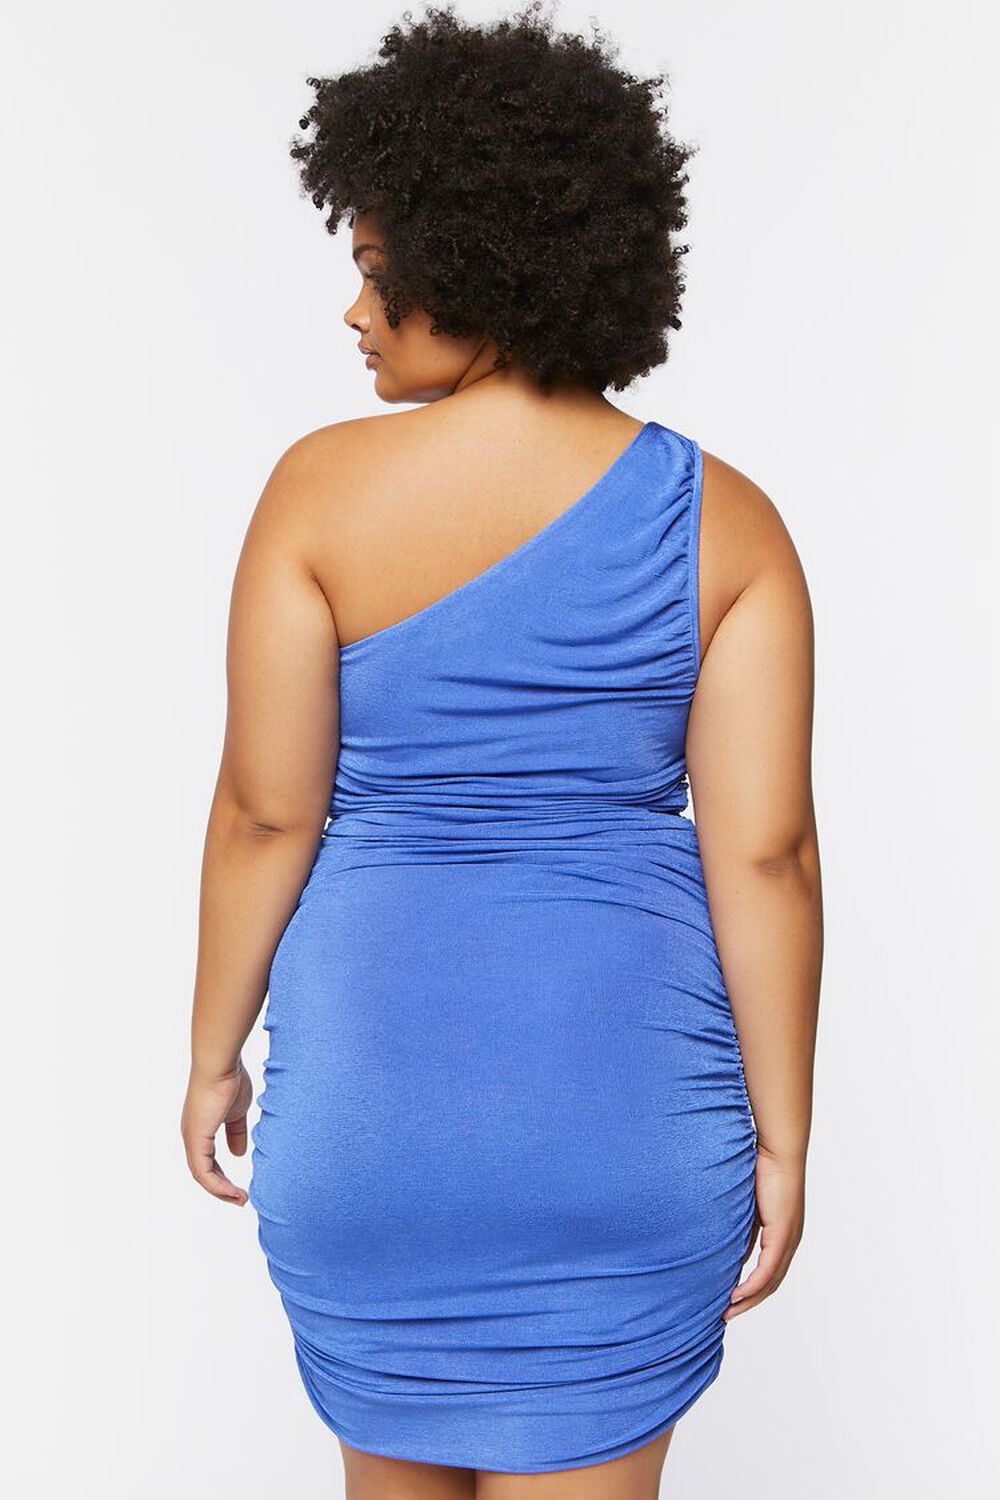 ROYAL Plus Size One-Shoulder Mini Dress, image 3